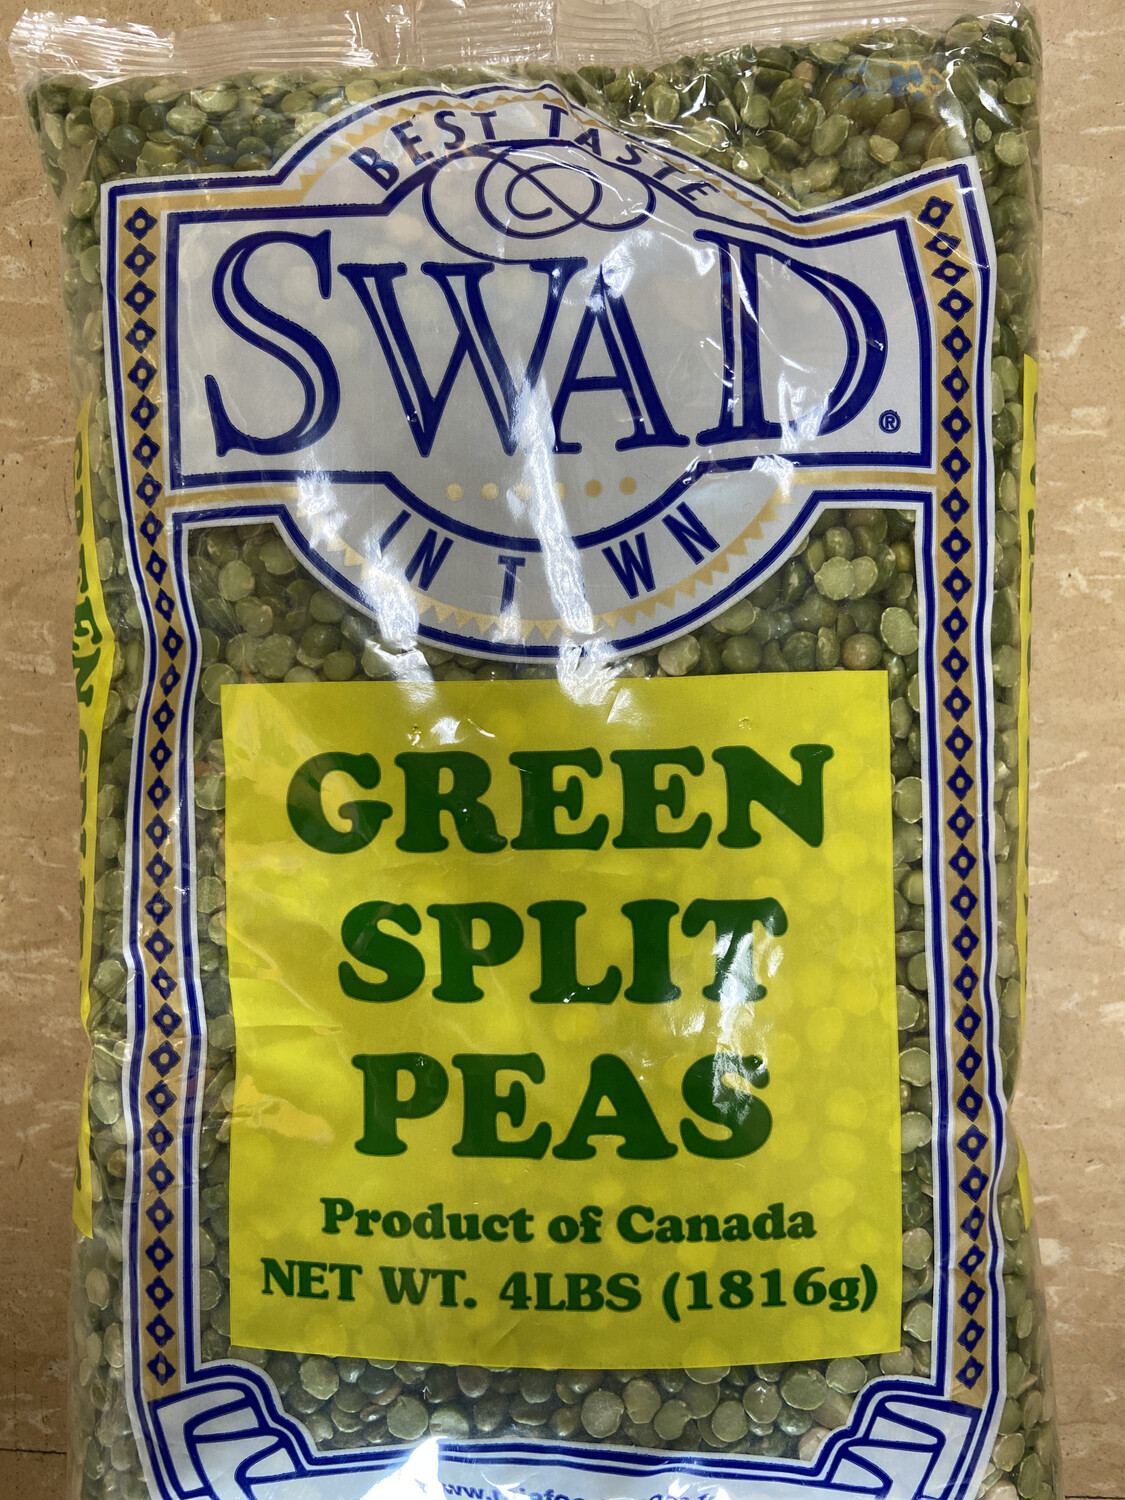 Swad Green Split Peas 4lb